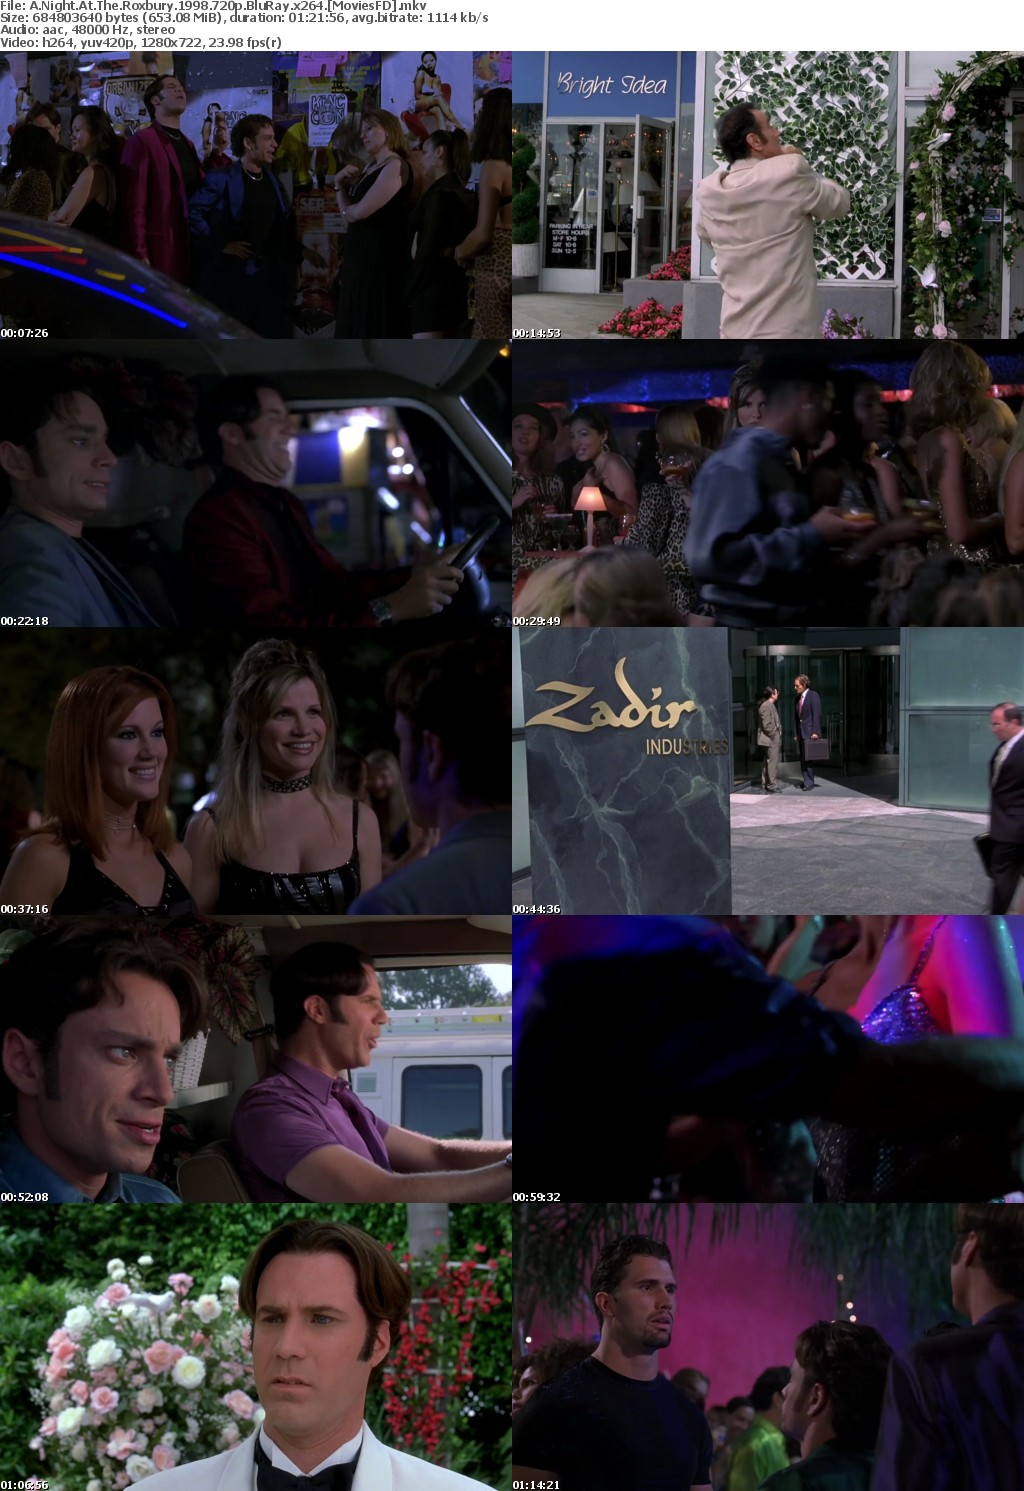 A Night At The Roxbury 1998 720p BluRay x264 MoviesFD